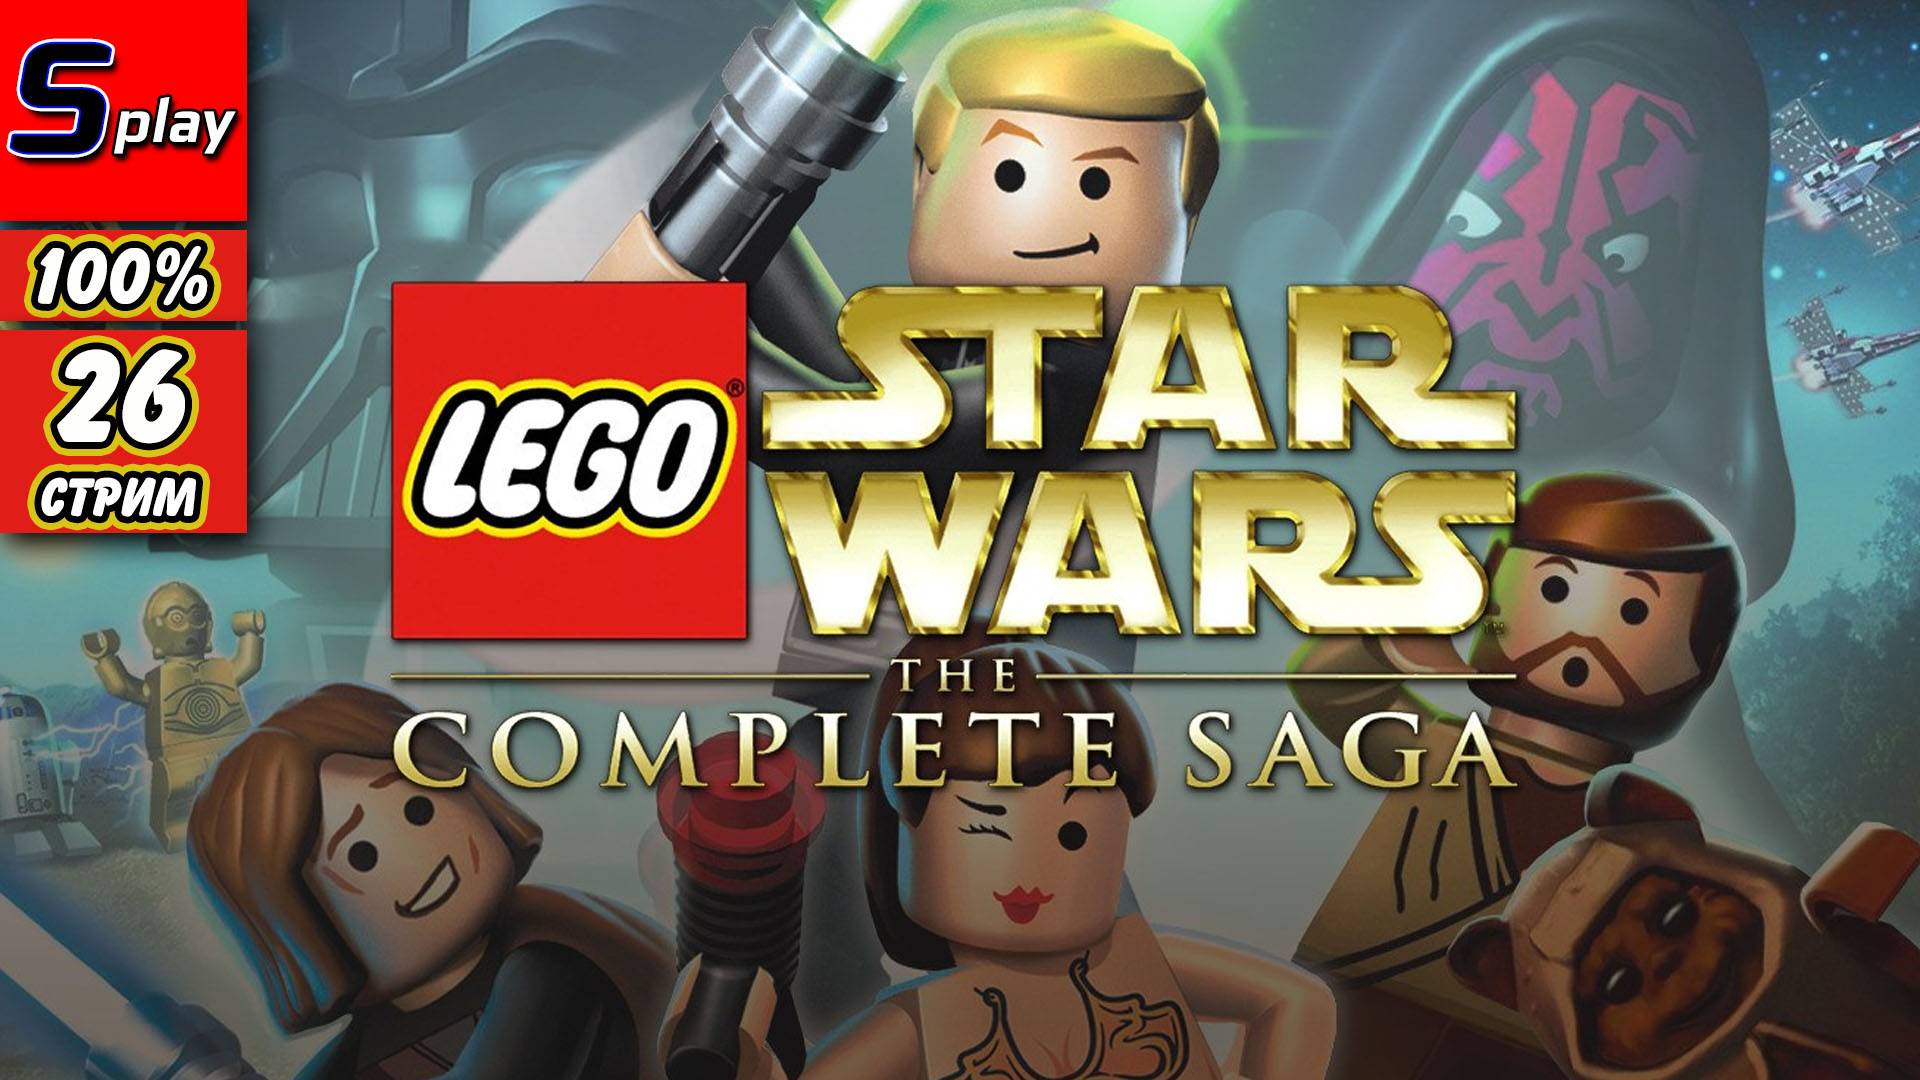 Lego Star Wars The Complete Saga на 100% - [26-стрим] - Собирательство